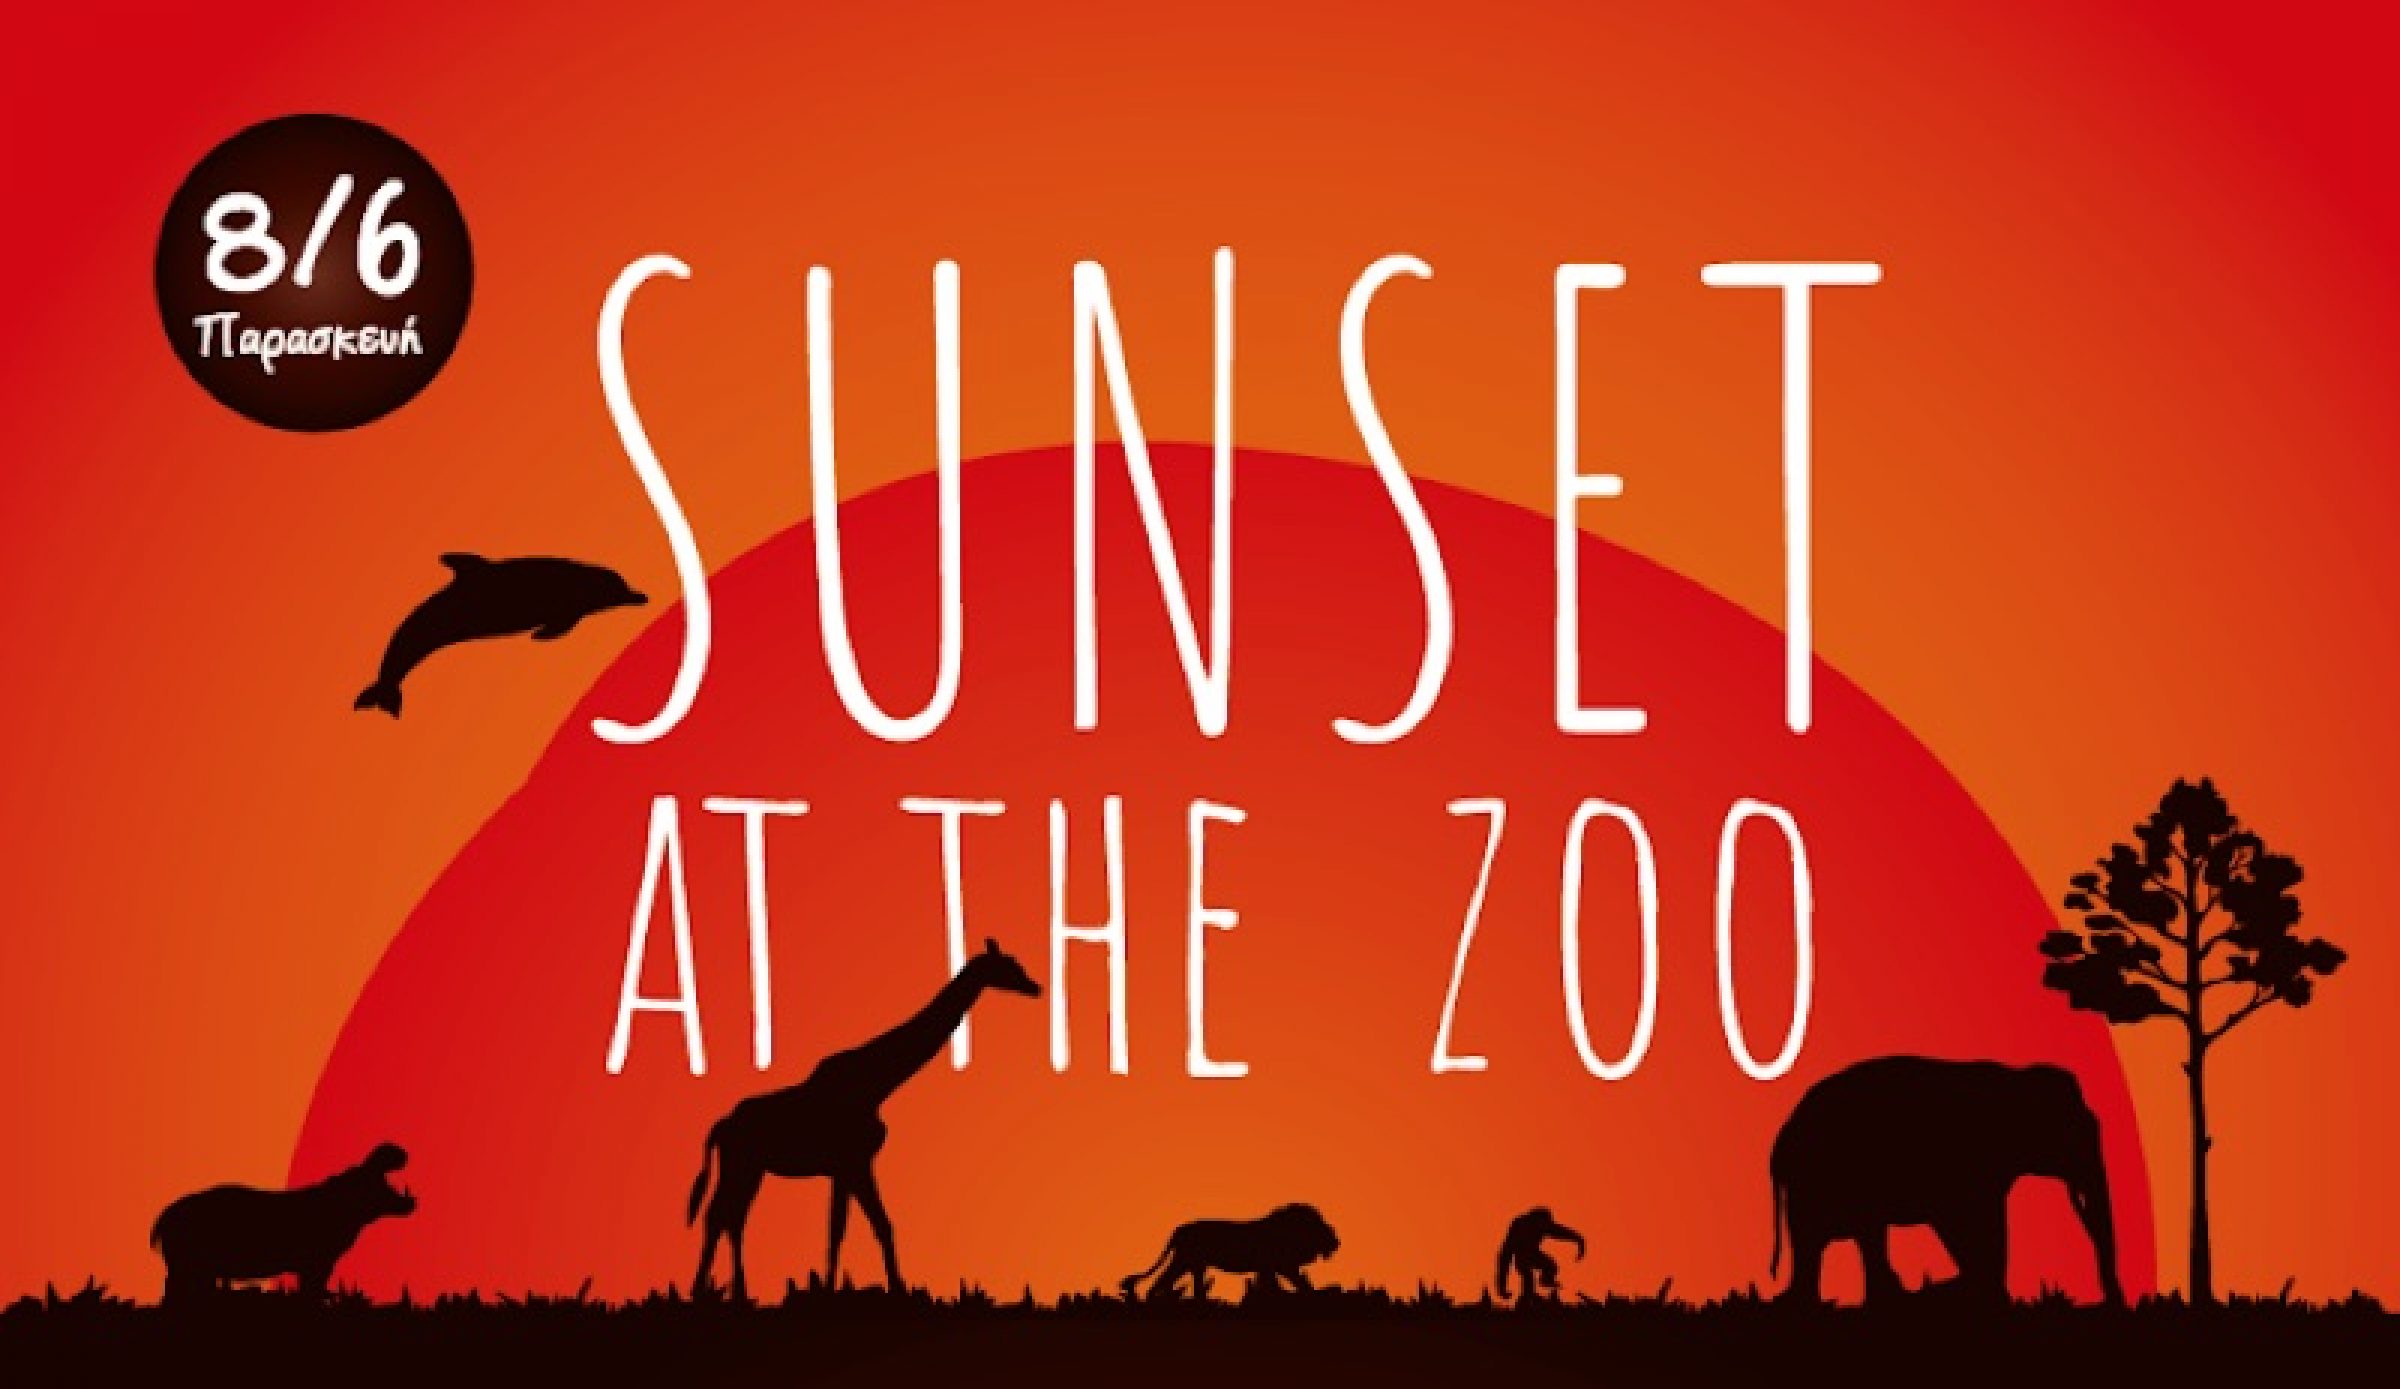 “Sunset at the Zoo” στο Αττικό Ζωολογικό Πάρκο Eimaimama.gr